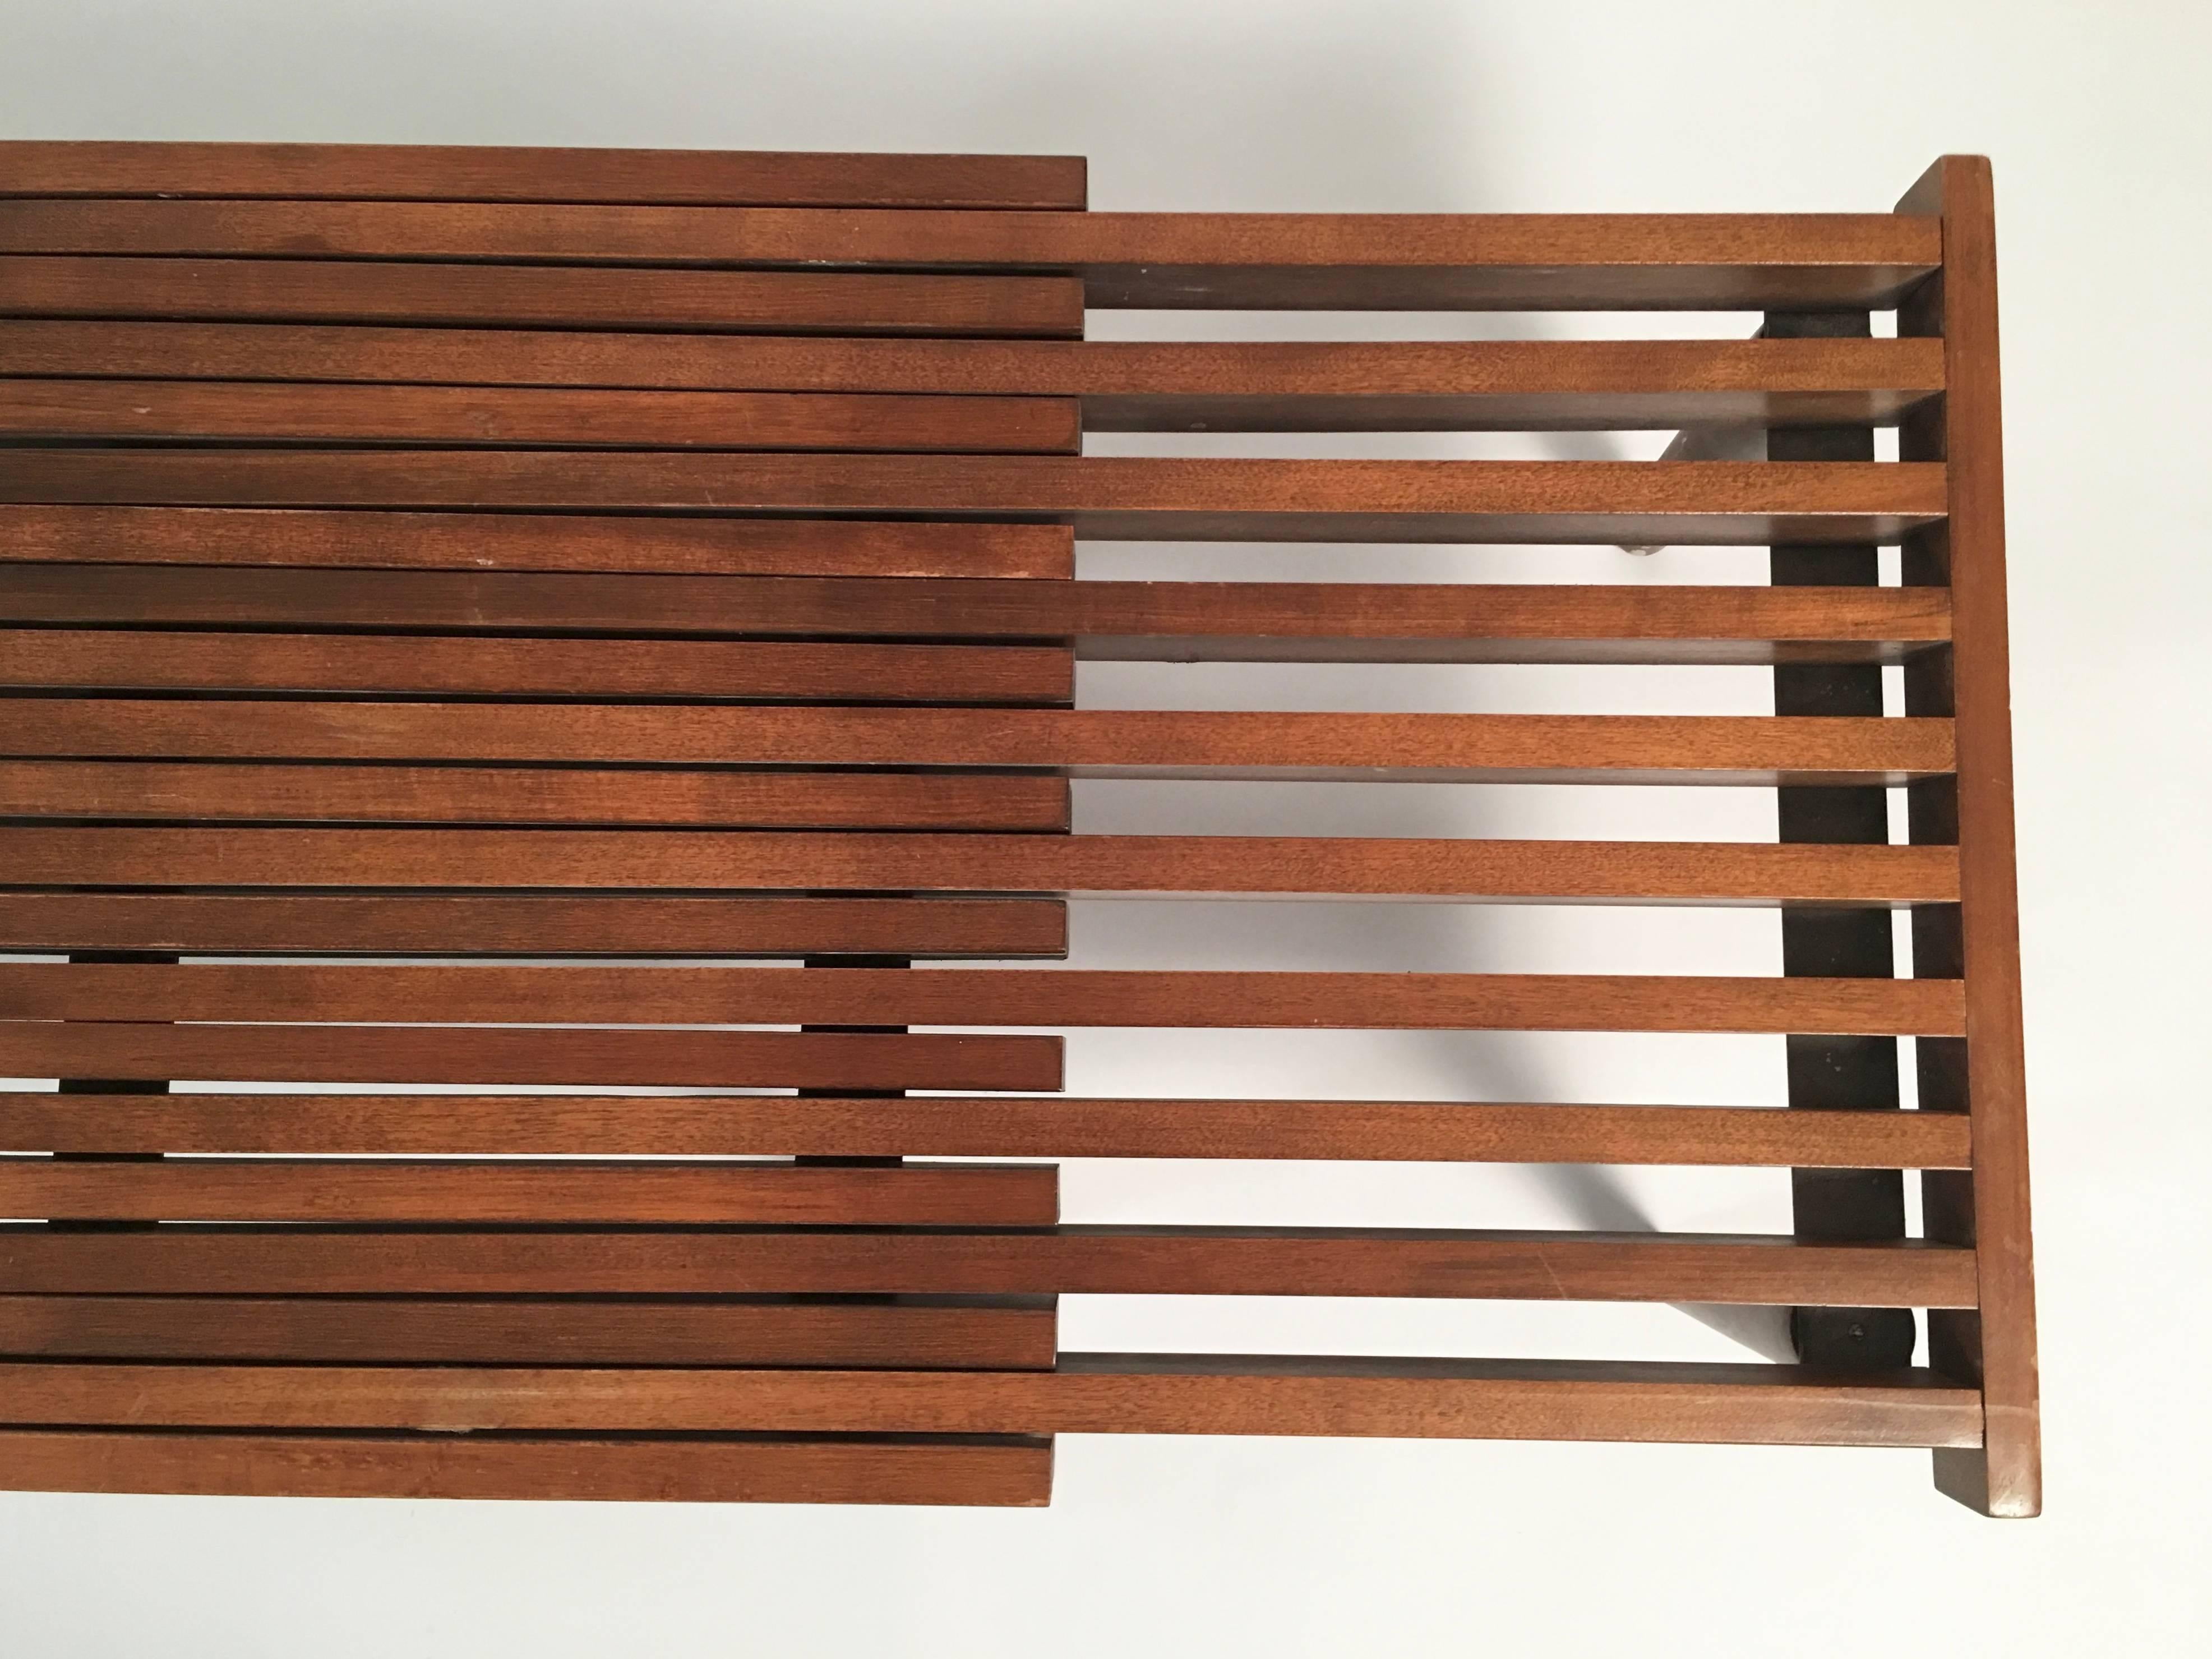 Metal Mid-Century Slat Wood Bench or Coffee Table, Adjustable Length